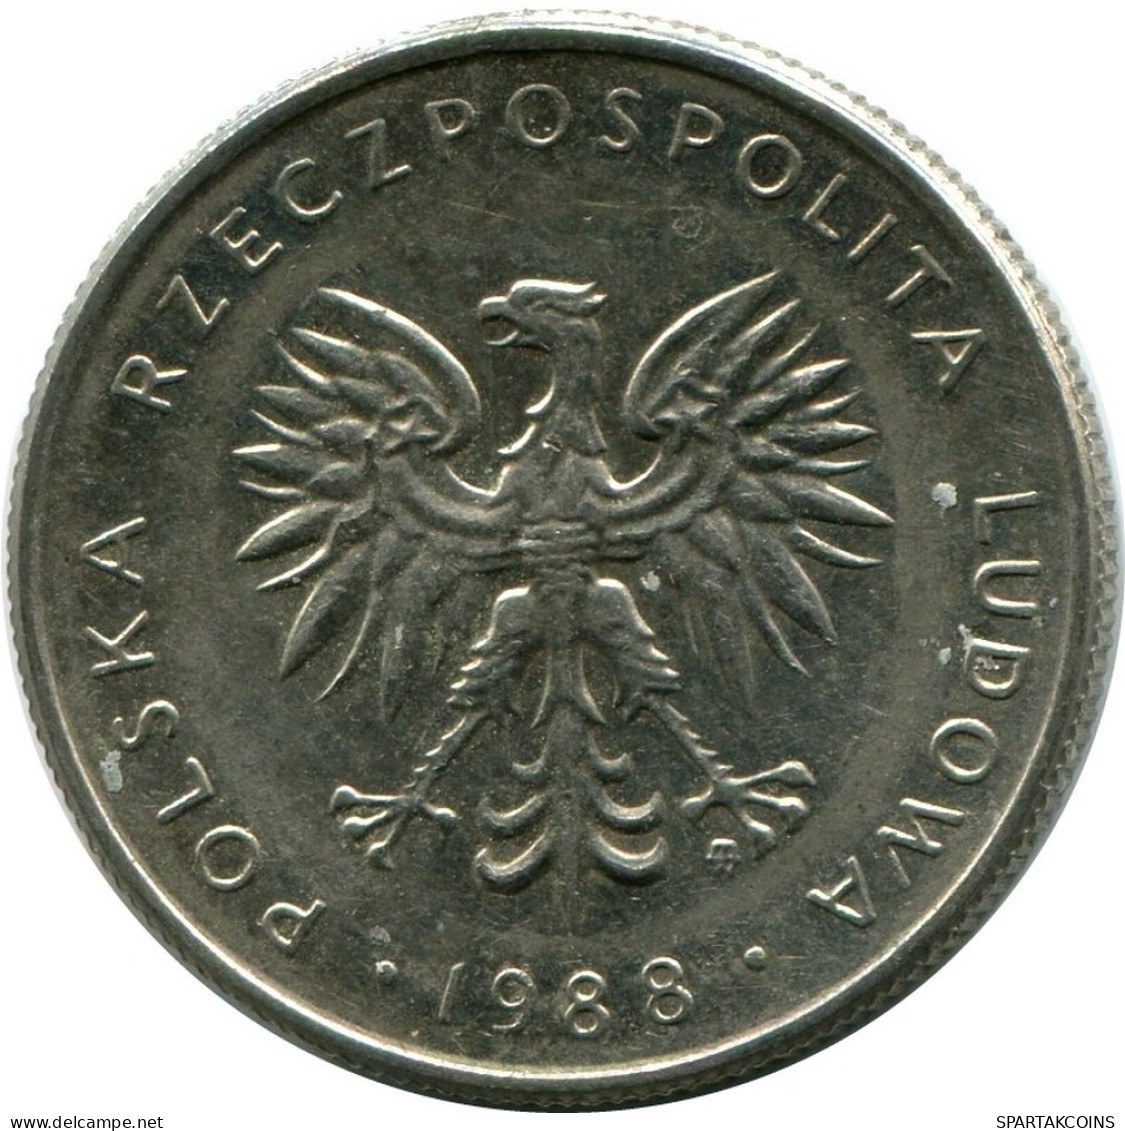 10 ZLOTYCH 1988 POLAND Coin #M10236.U.A - Polen